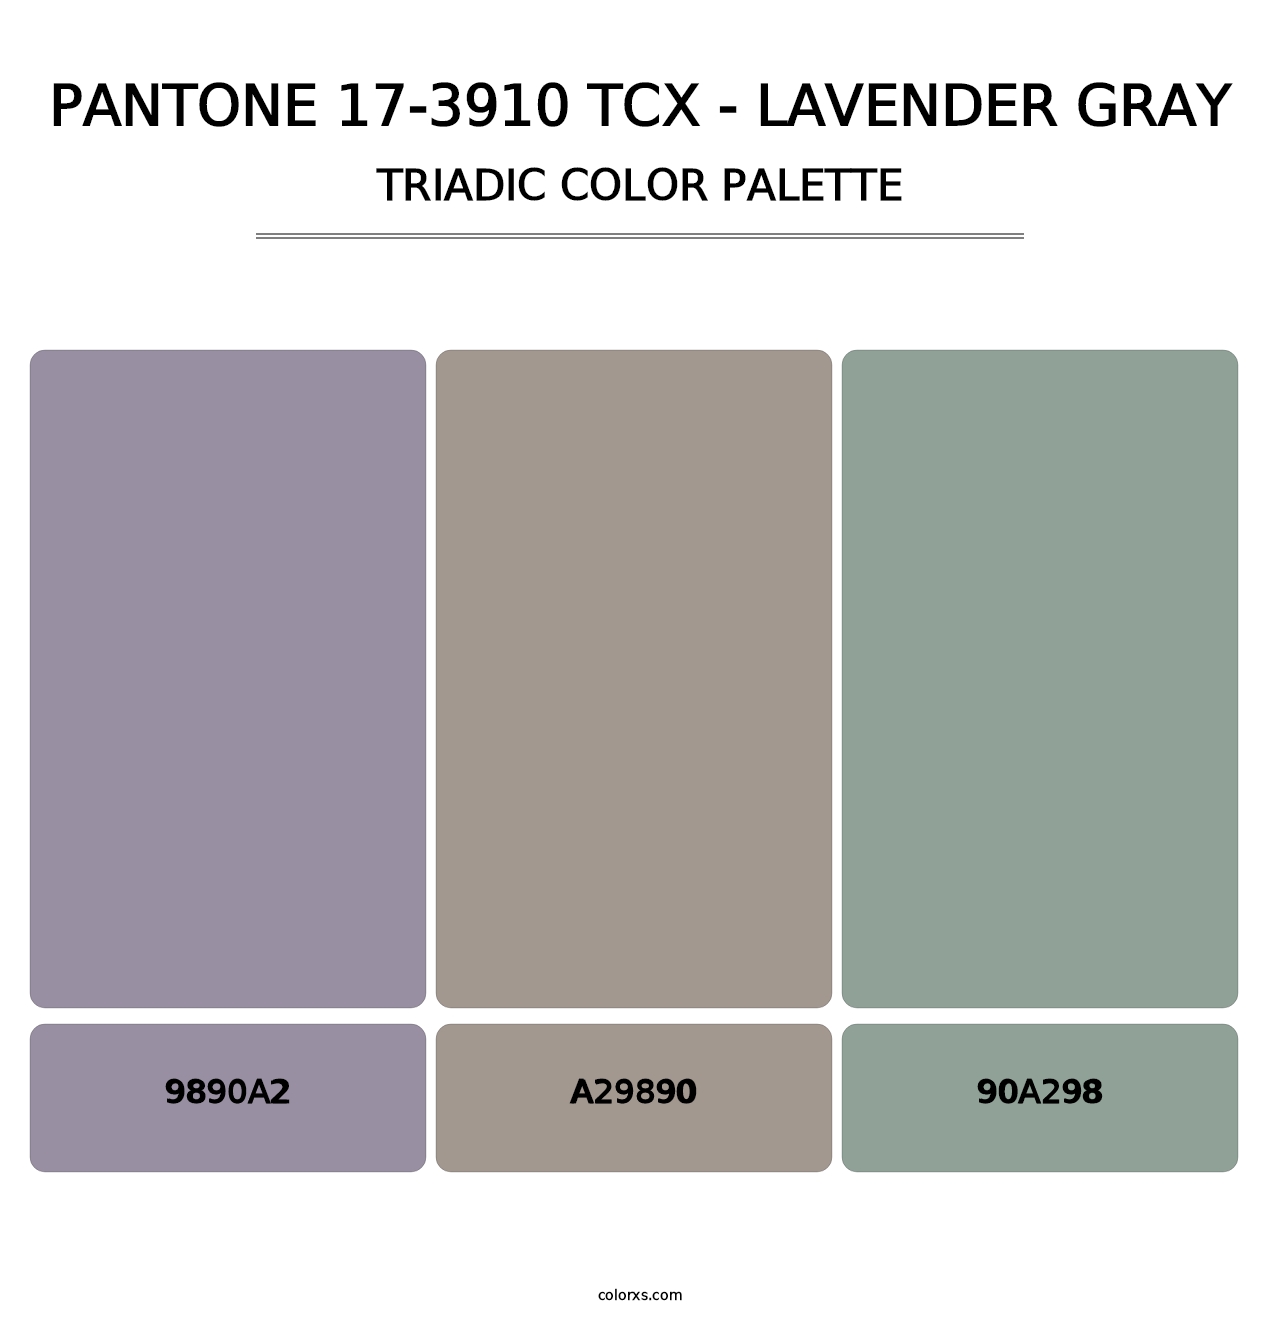 PANTONE 17-3910 TCX - Lavender Gray - Triadic Color Palette